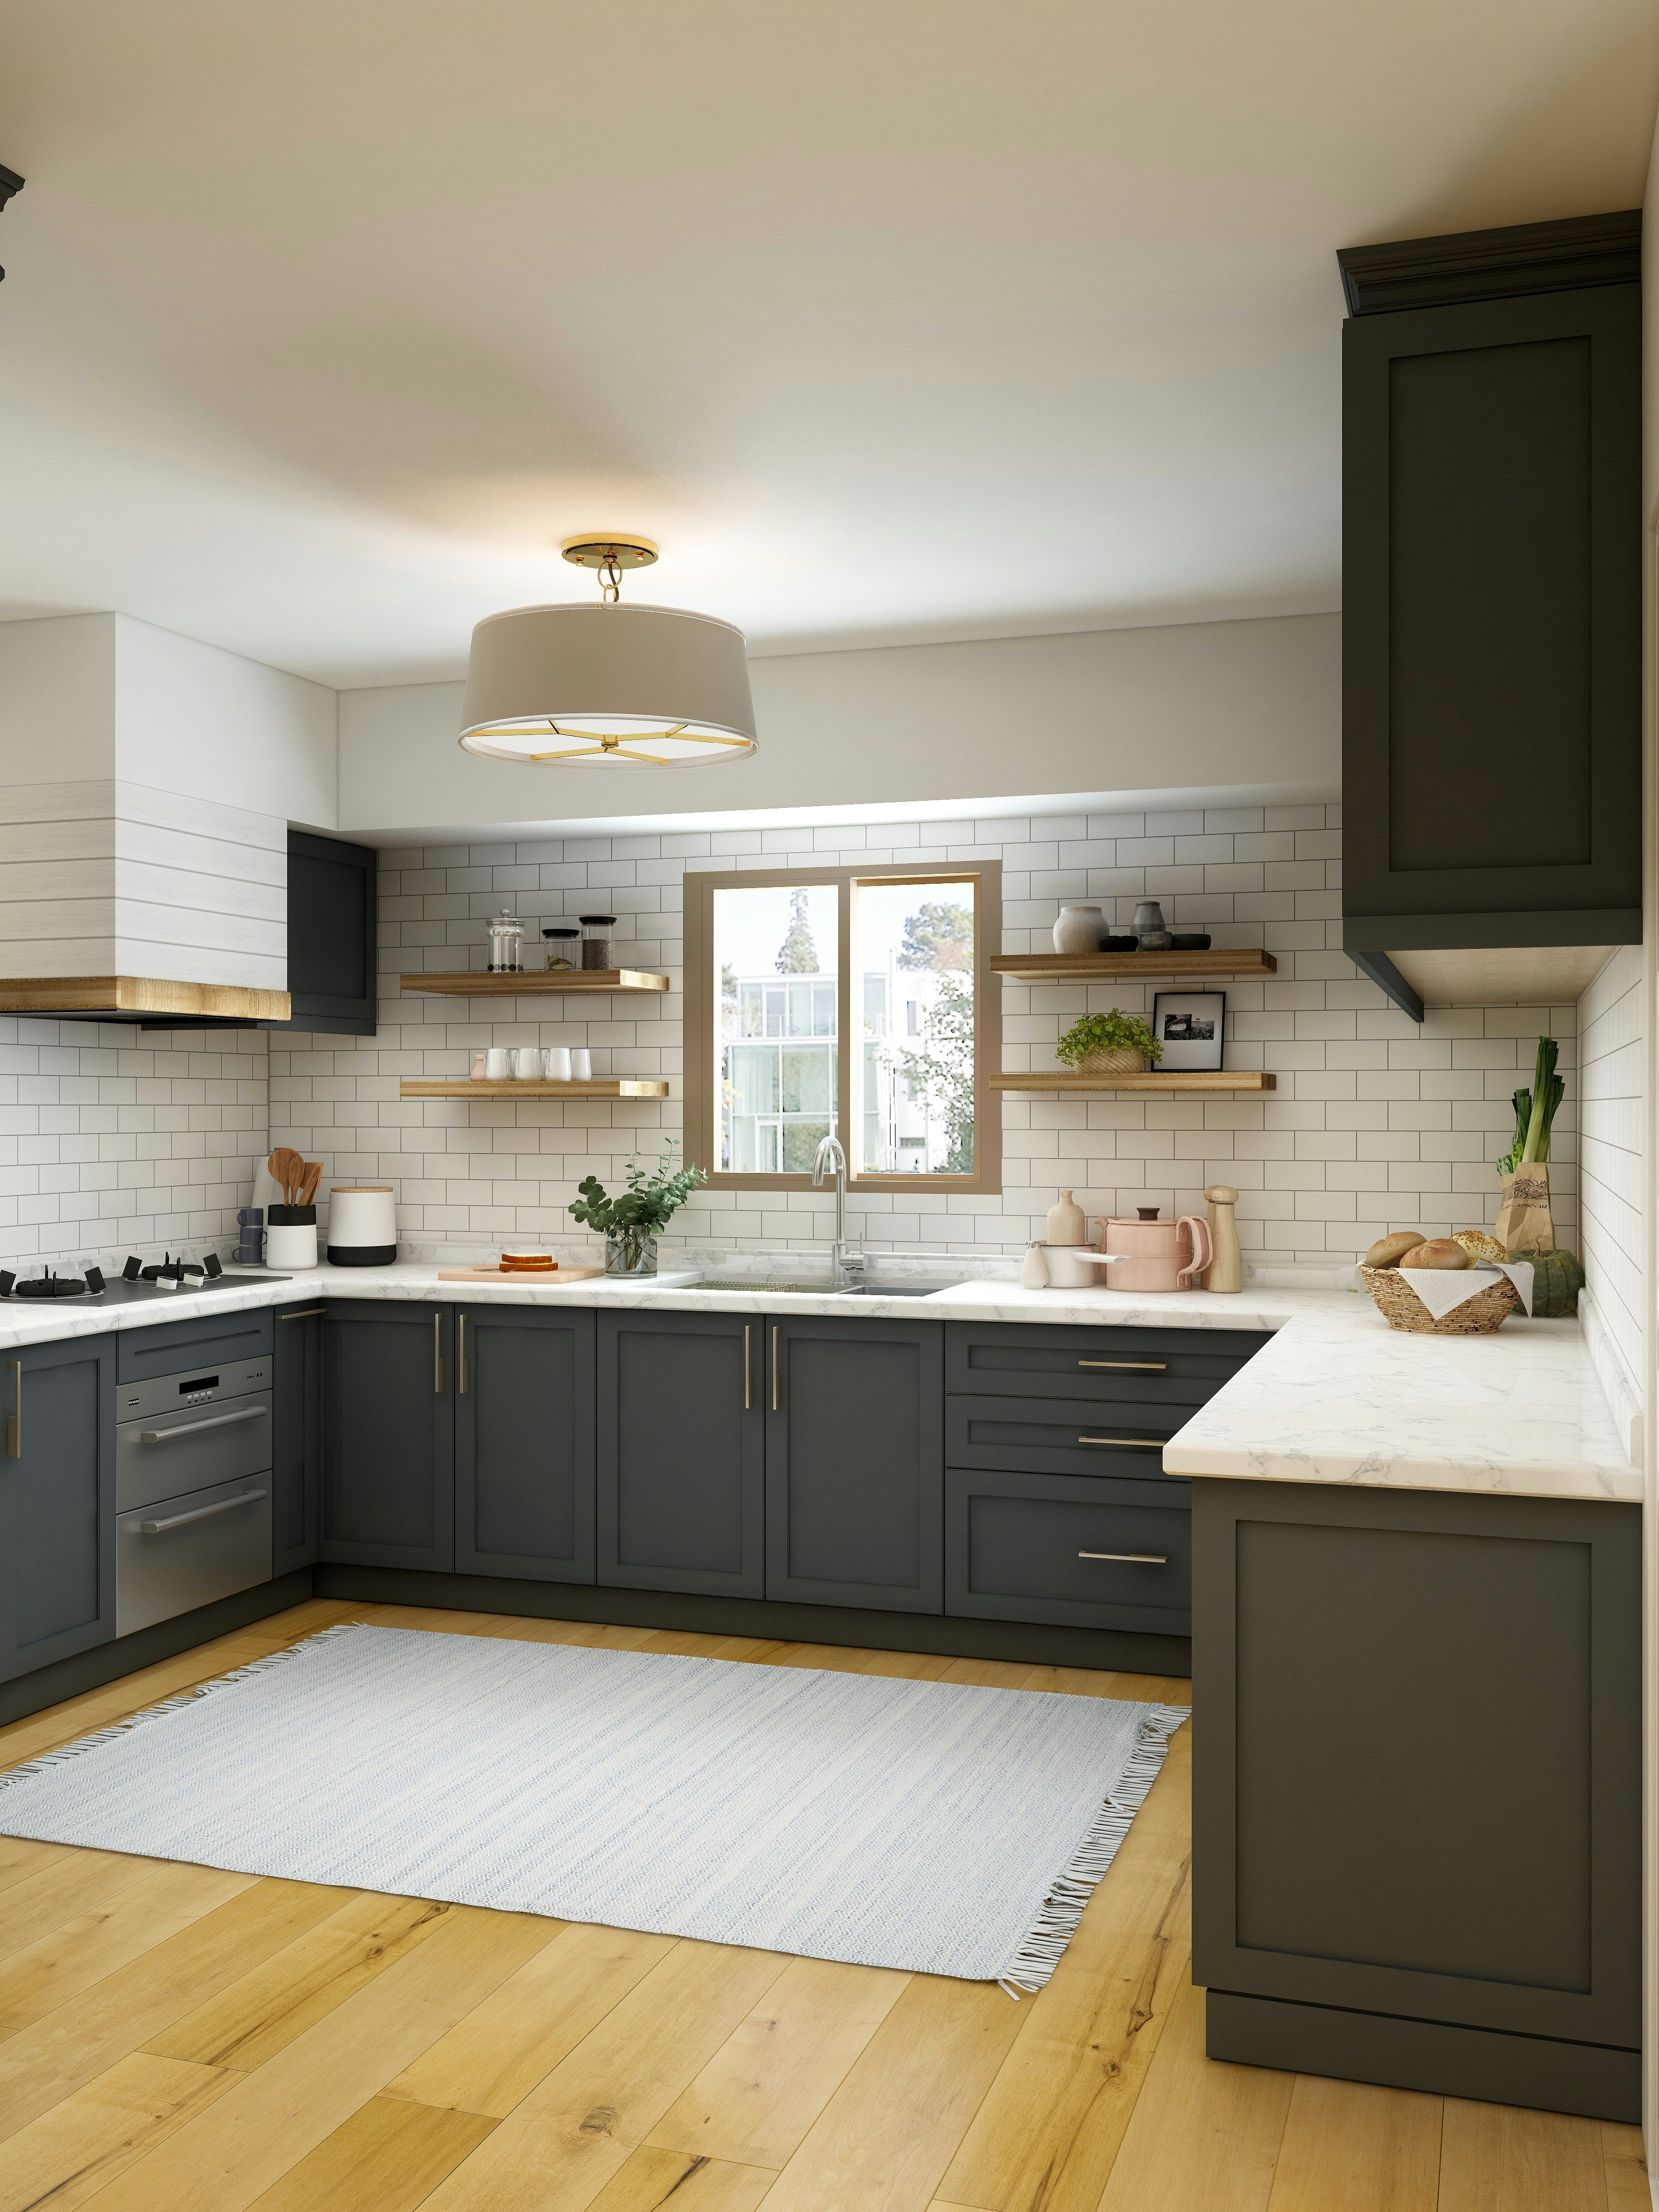 500+ Kitchen Design Pictures Download Free Images on Unsplash